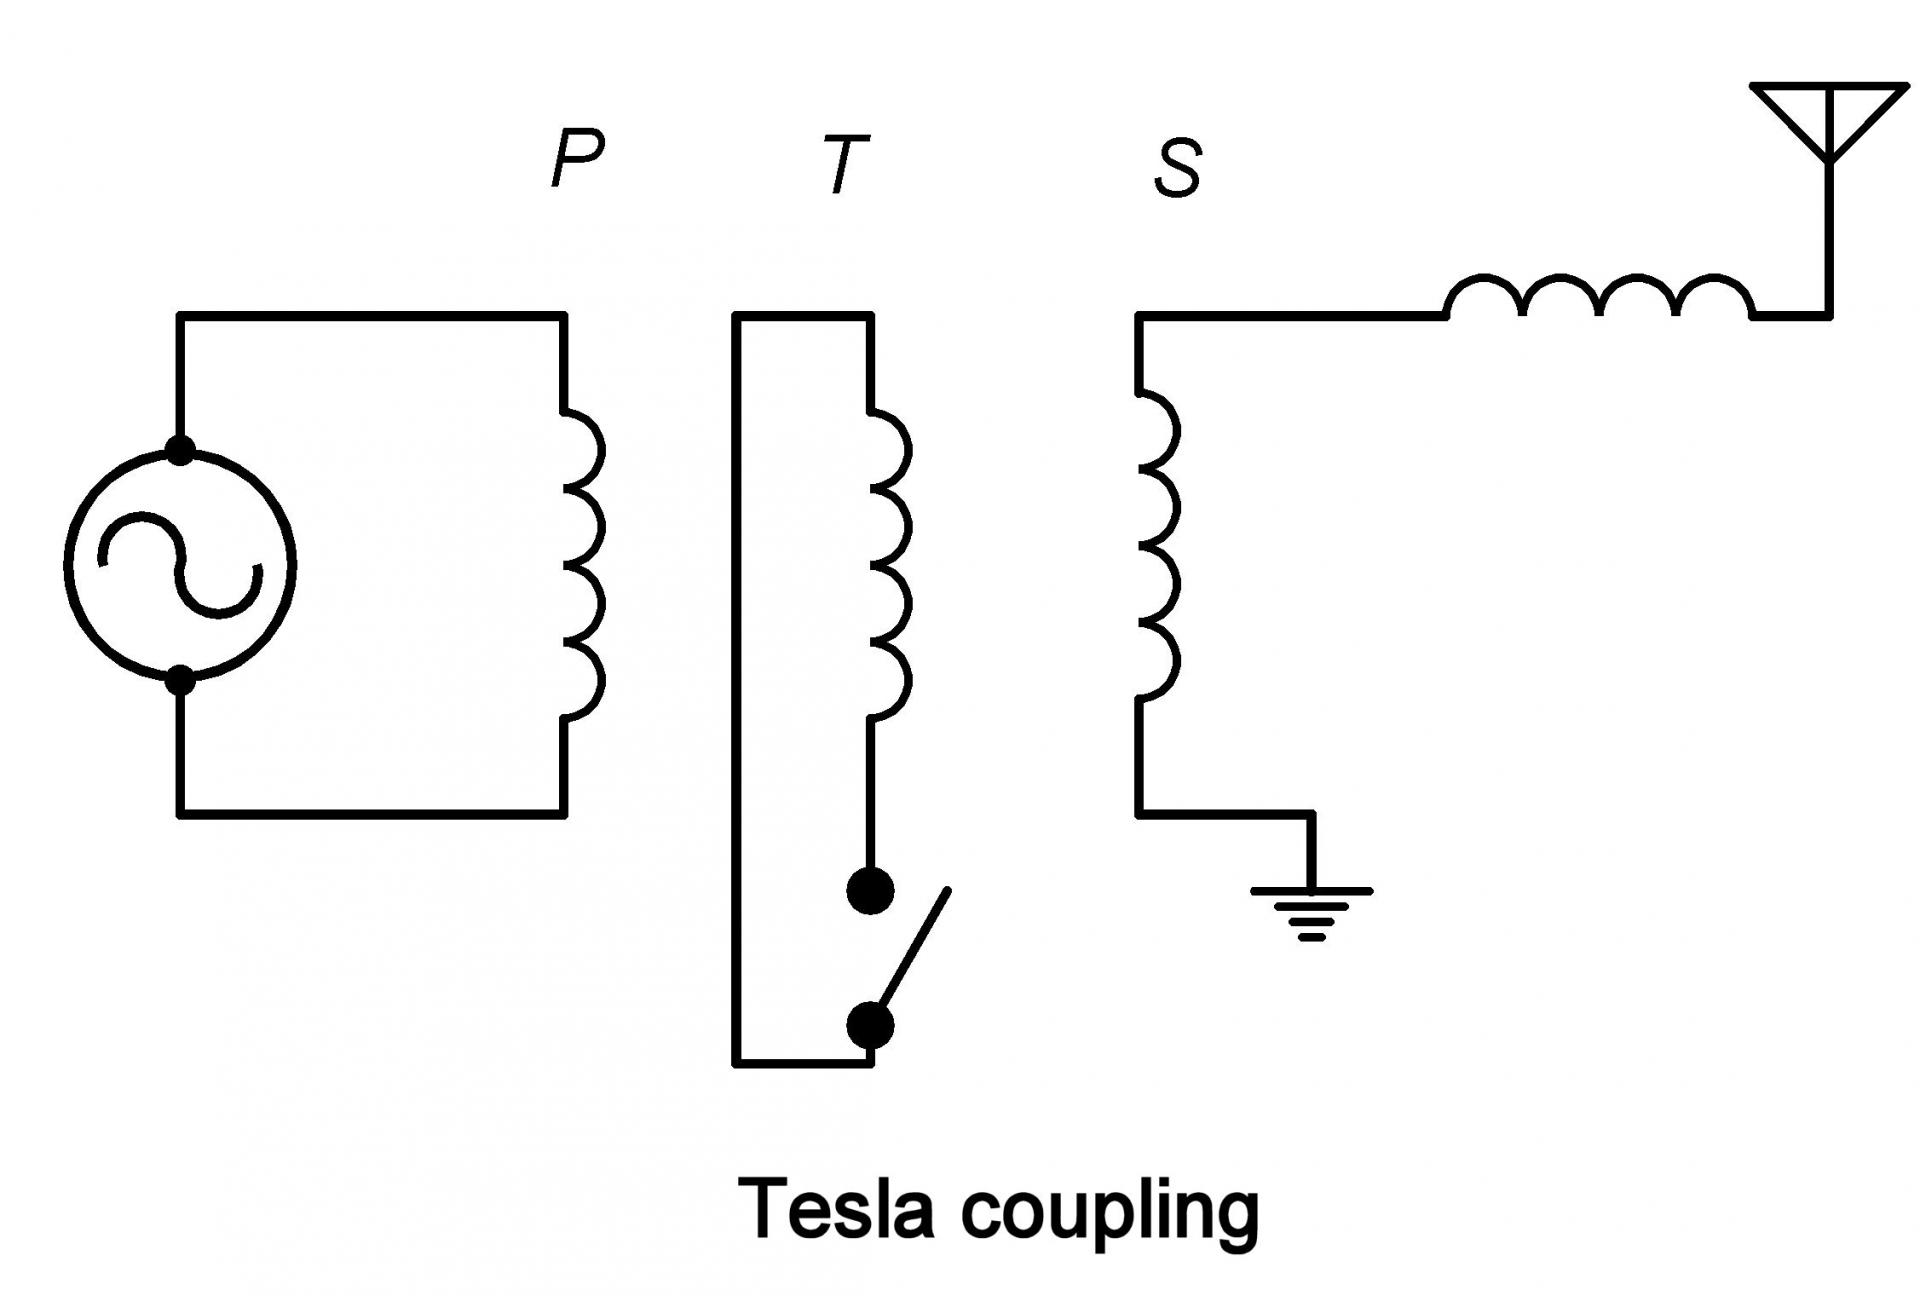 Ang tesla coupling